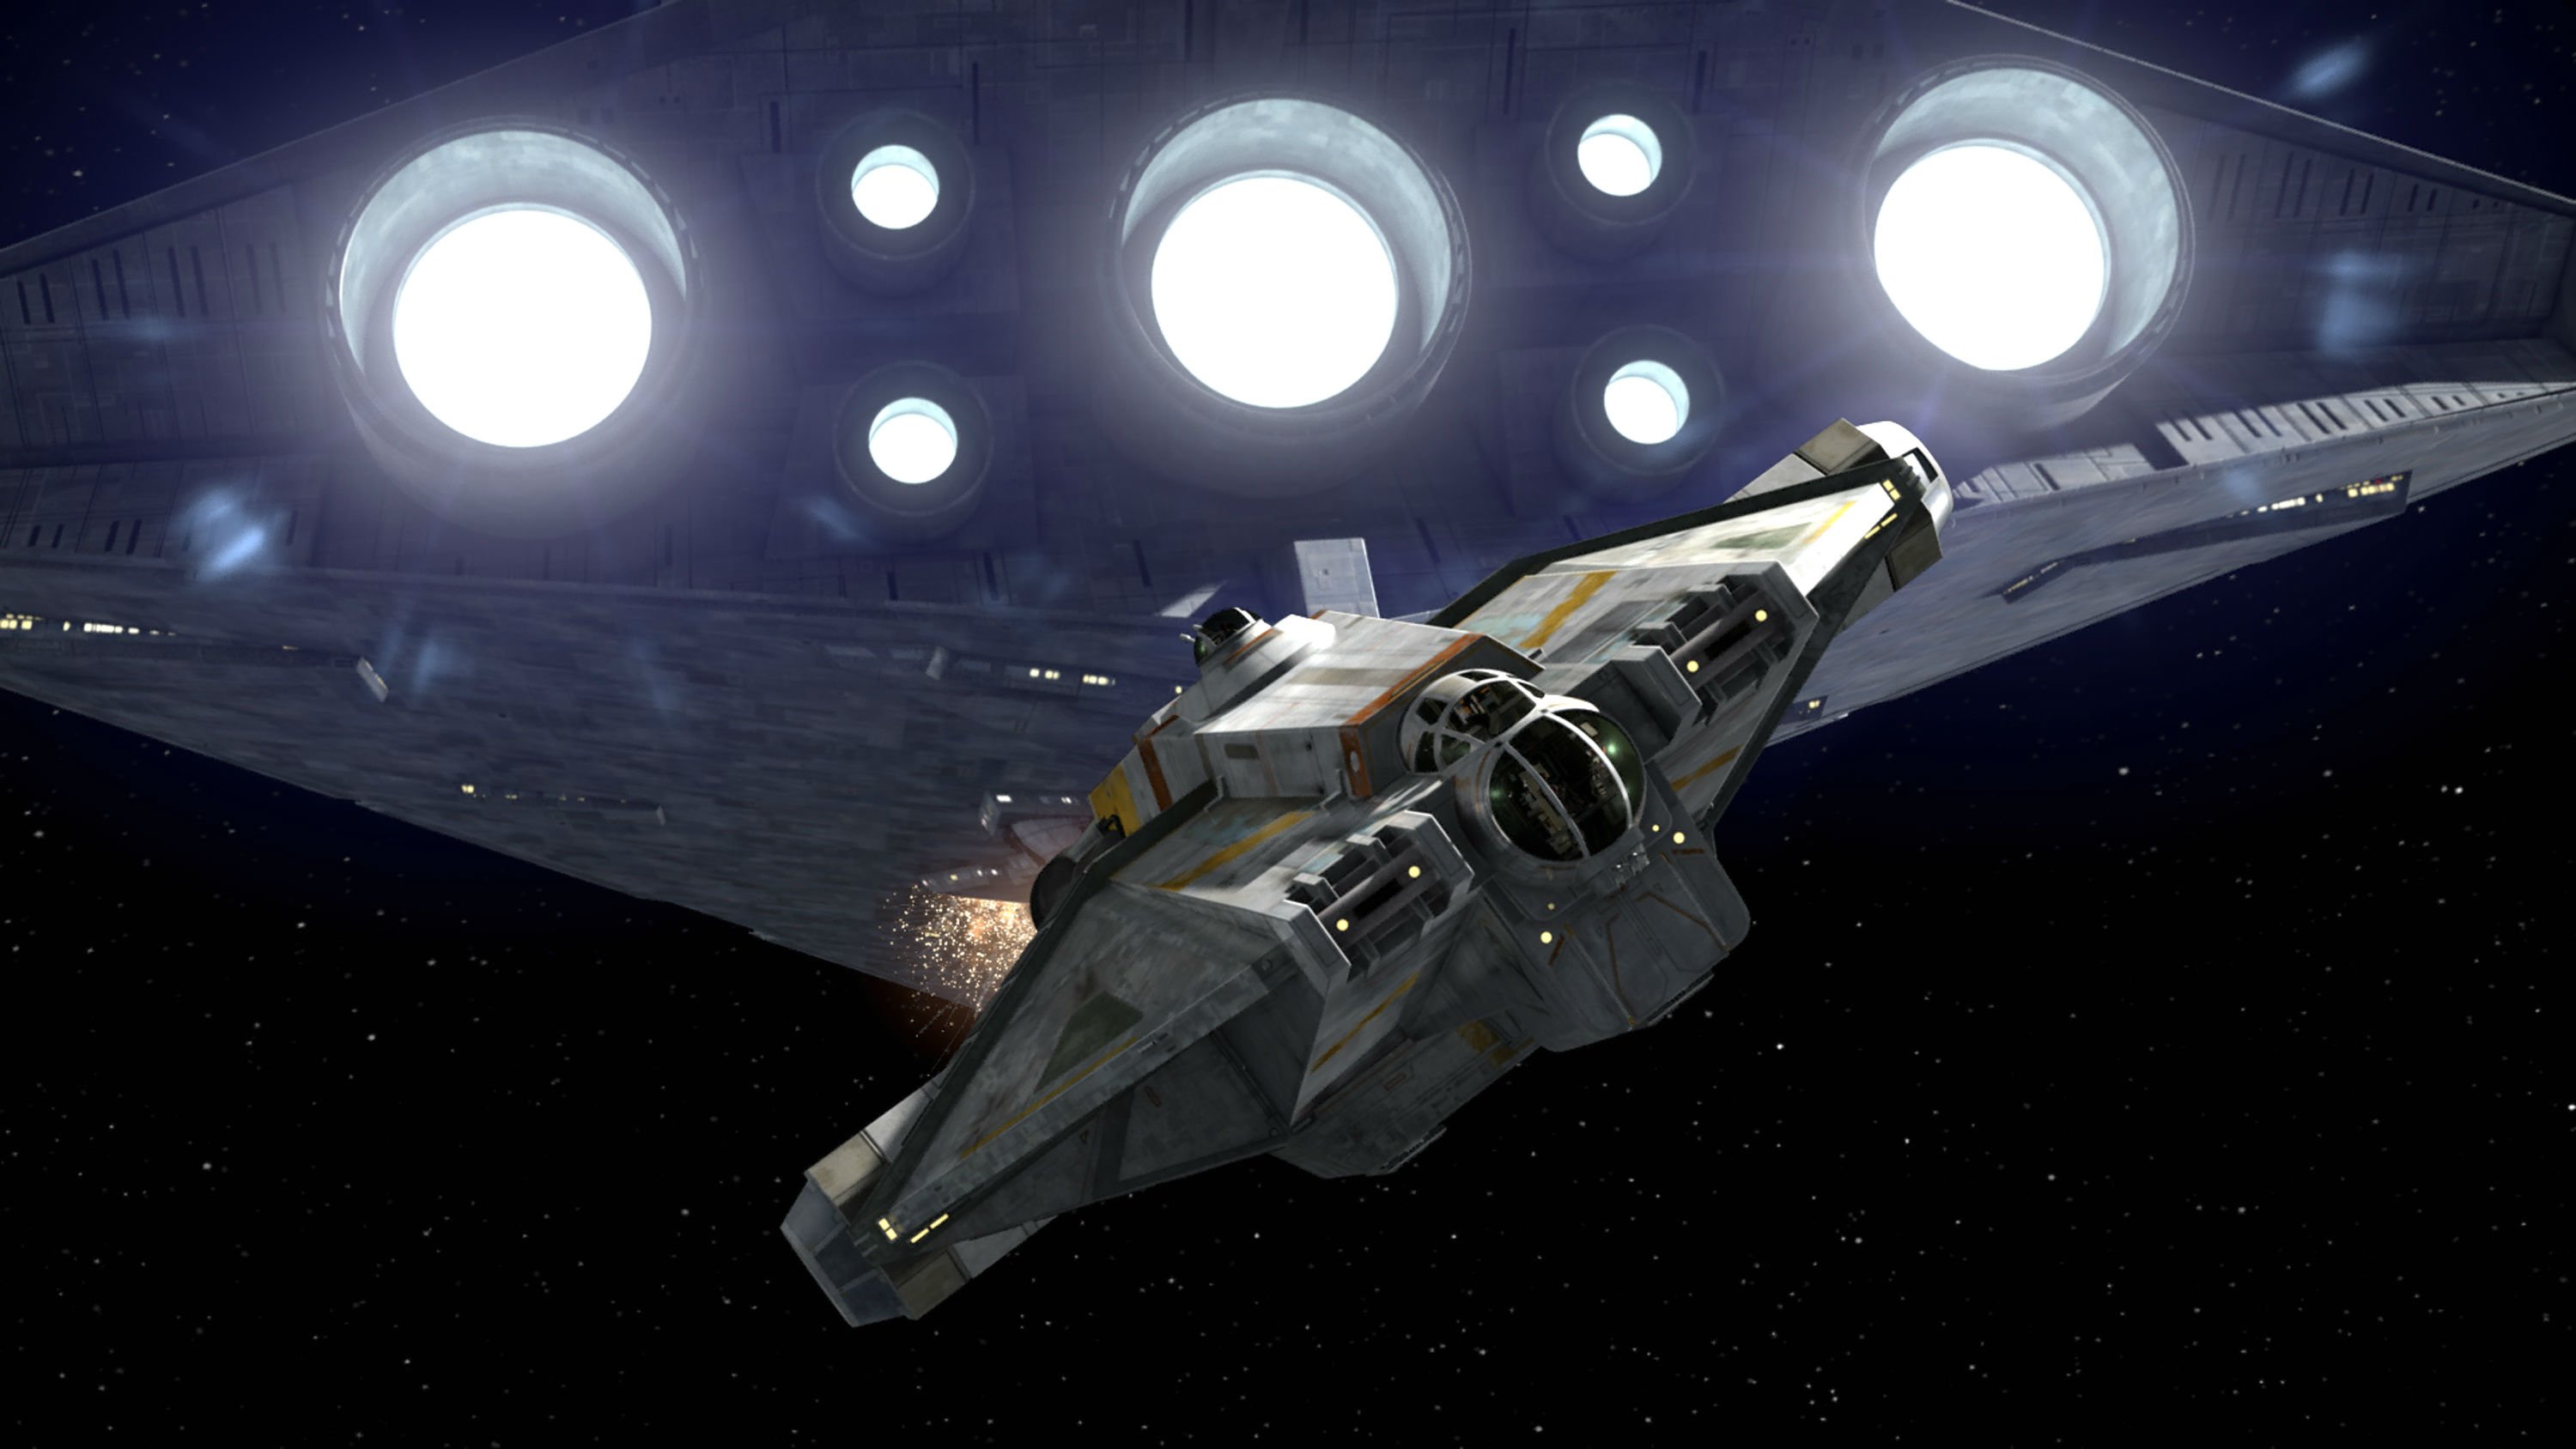 STAR WARS REBELS Animated Series Sci Fi Disney Action Adventure Spaceship Wallpaperx1688